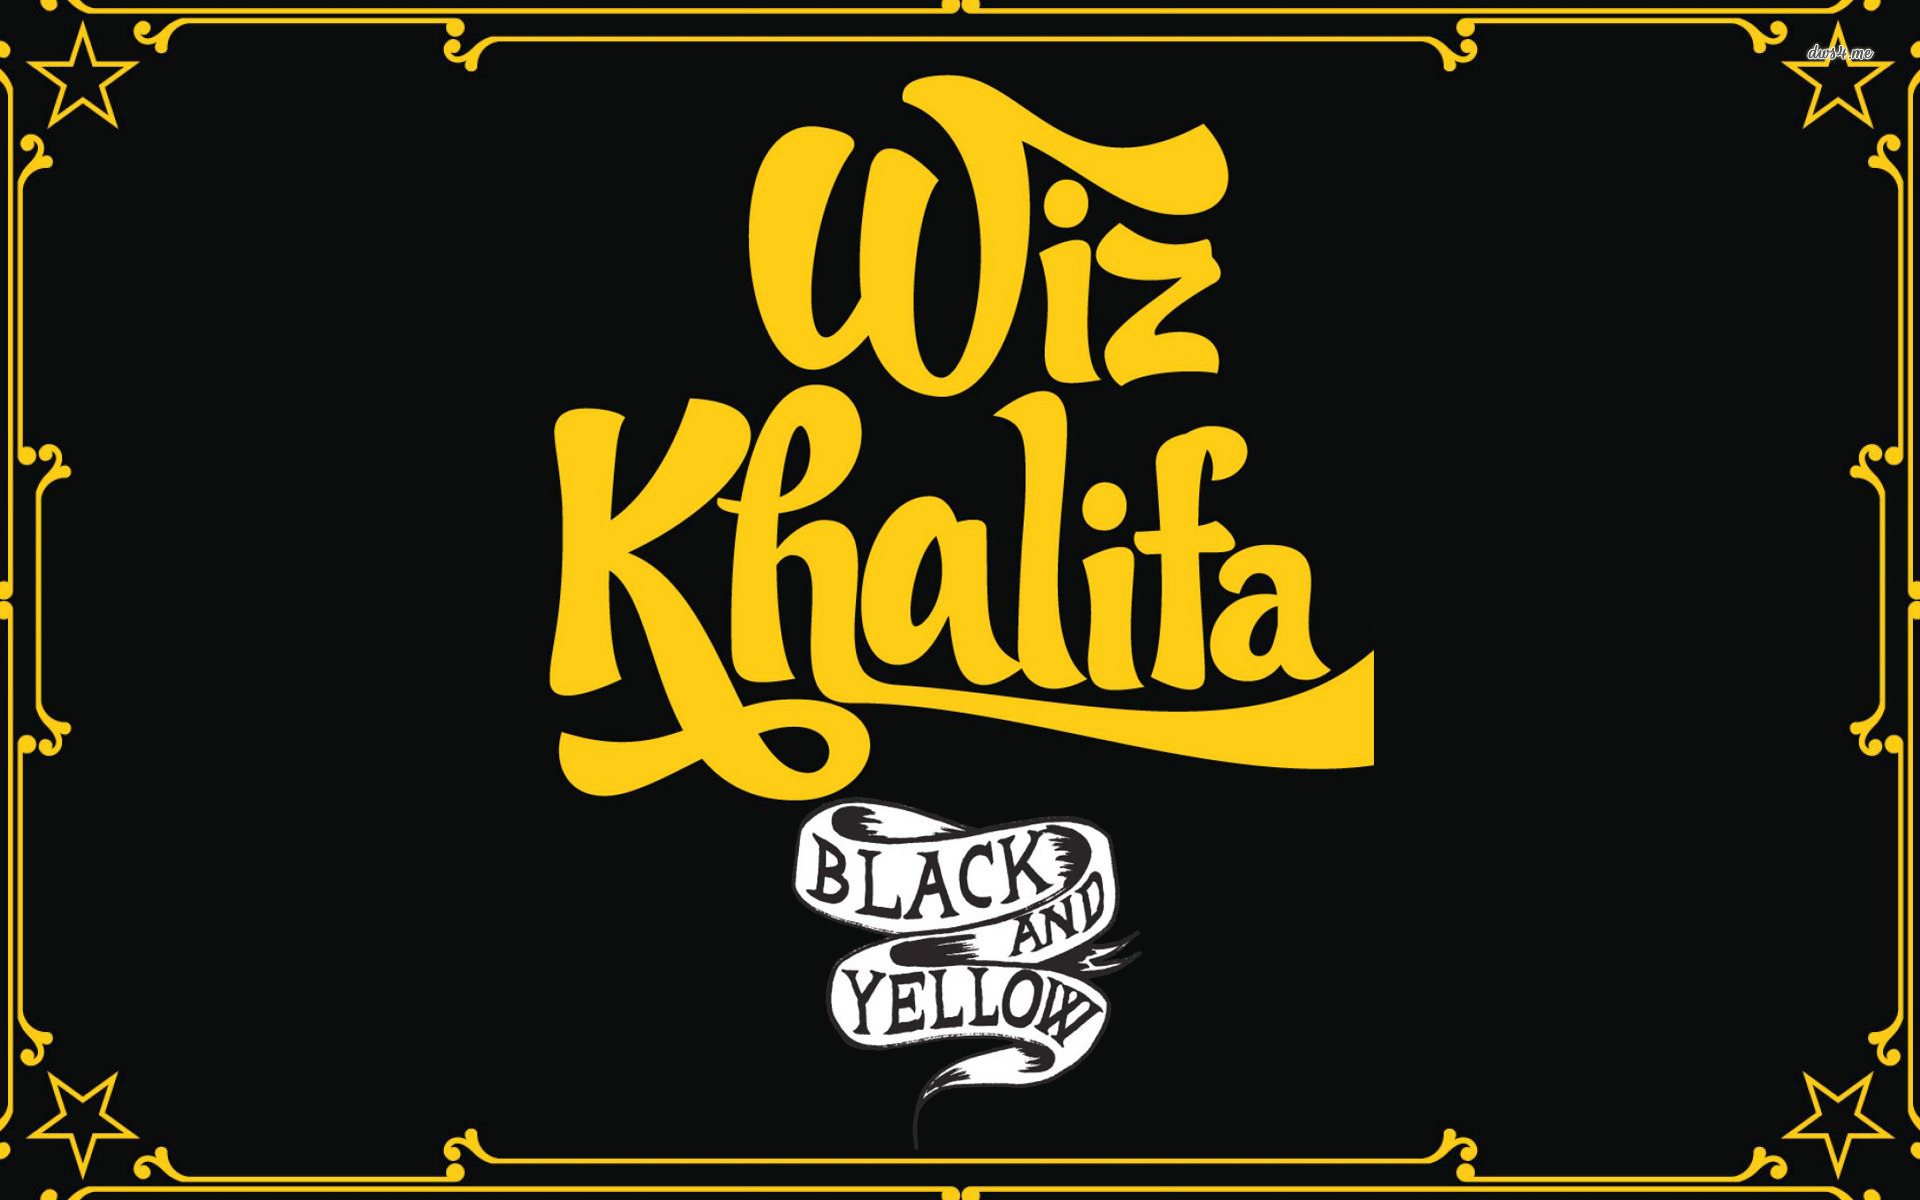 Black And Yellow Wiz Khalifa Cover - HD Wallpaper 